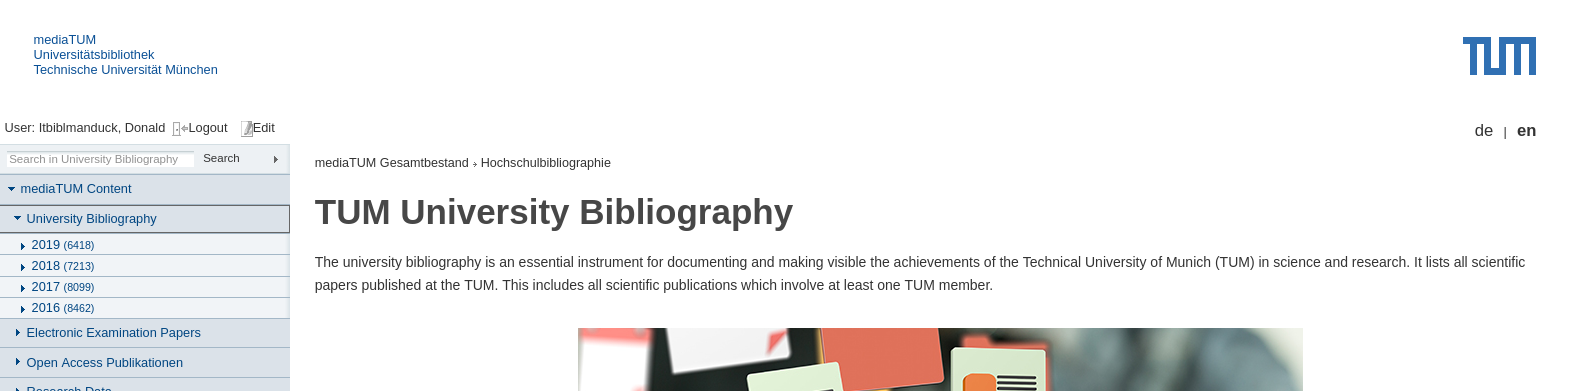 Frontend University Bibliography